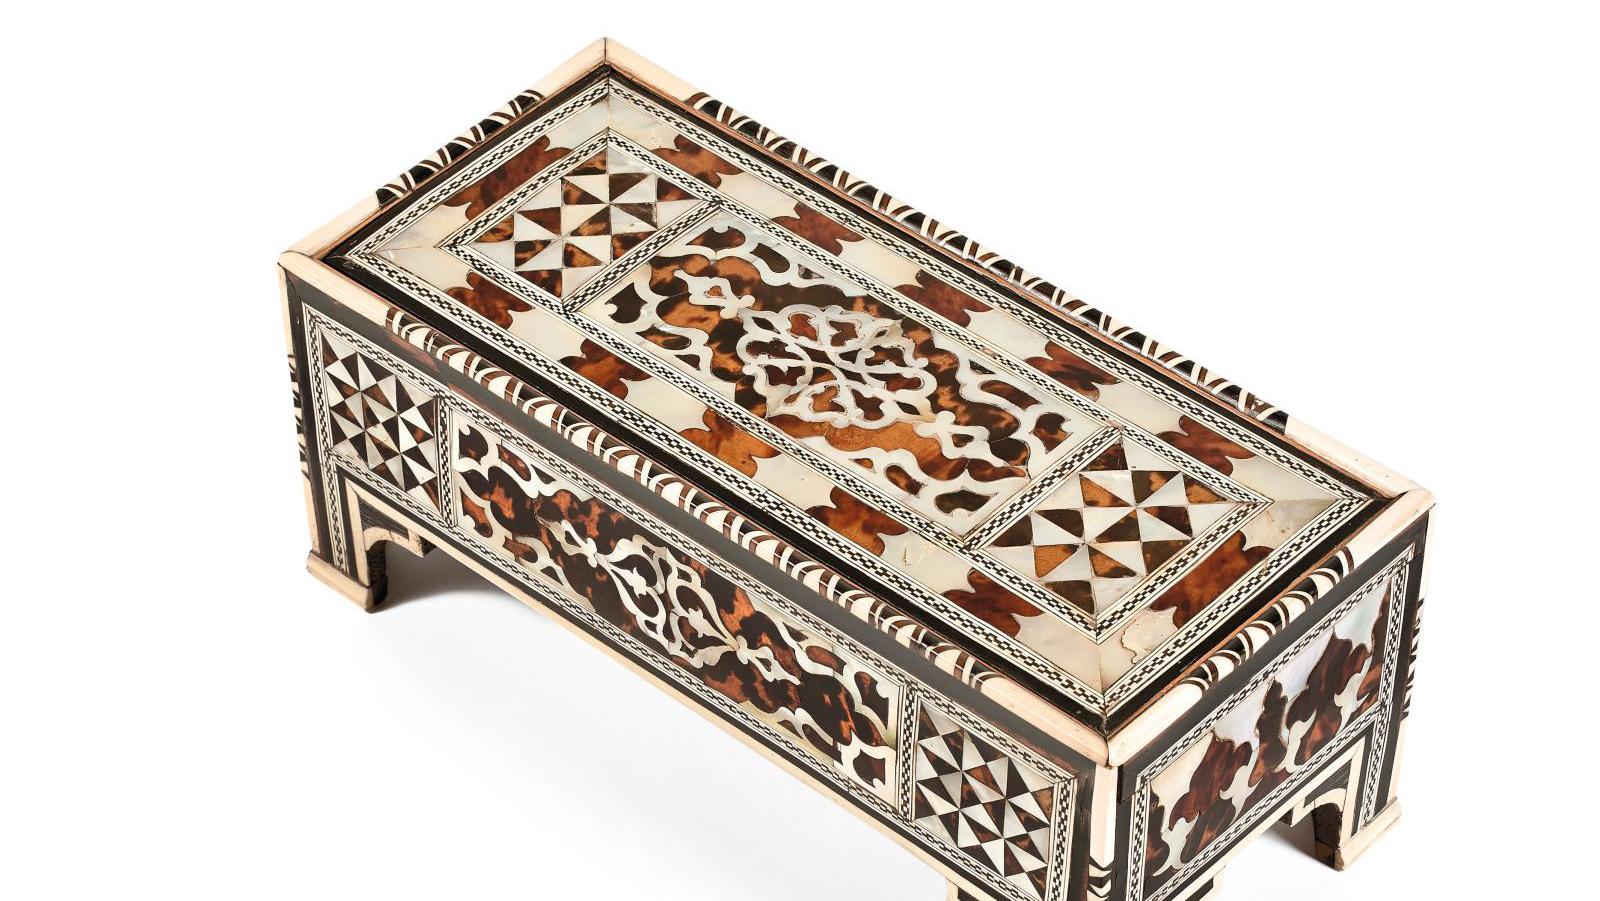 Ottoman Empire, late 16th century, Ottoman scribe’s writing desk in wood, tortoiseshell... An Ottoman Portable Desk 